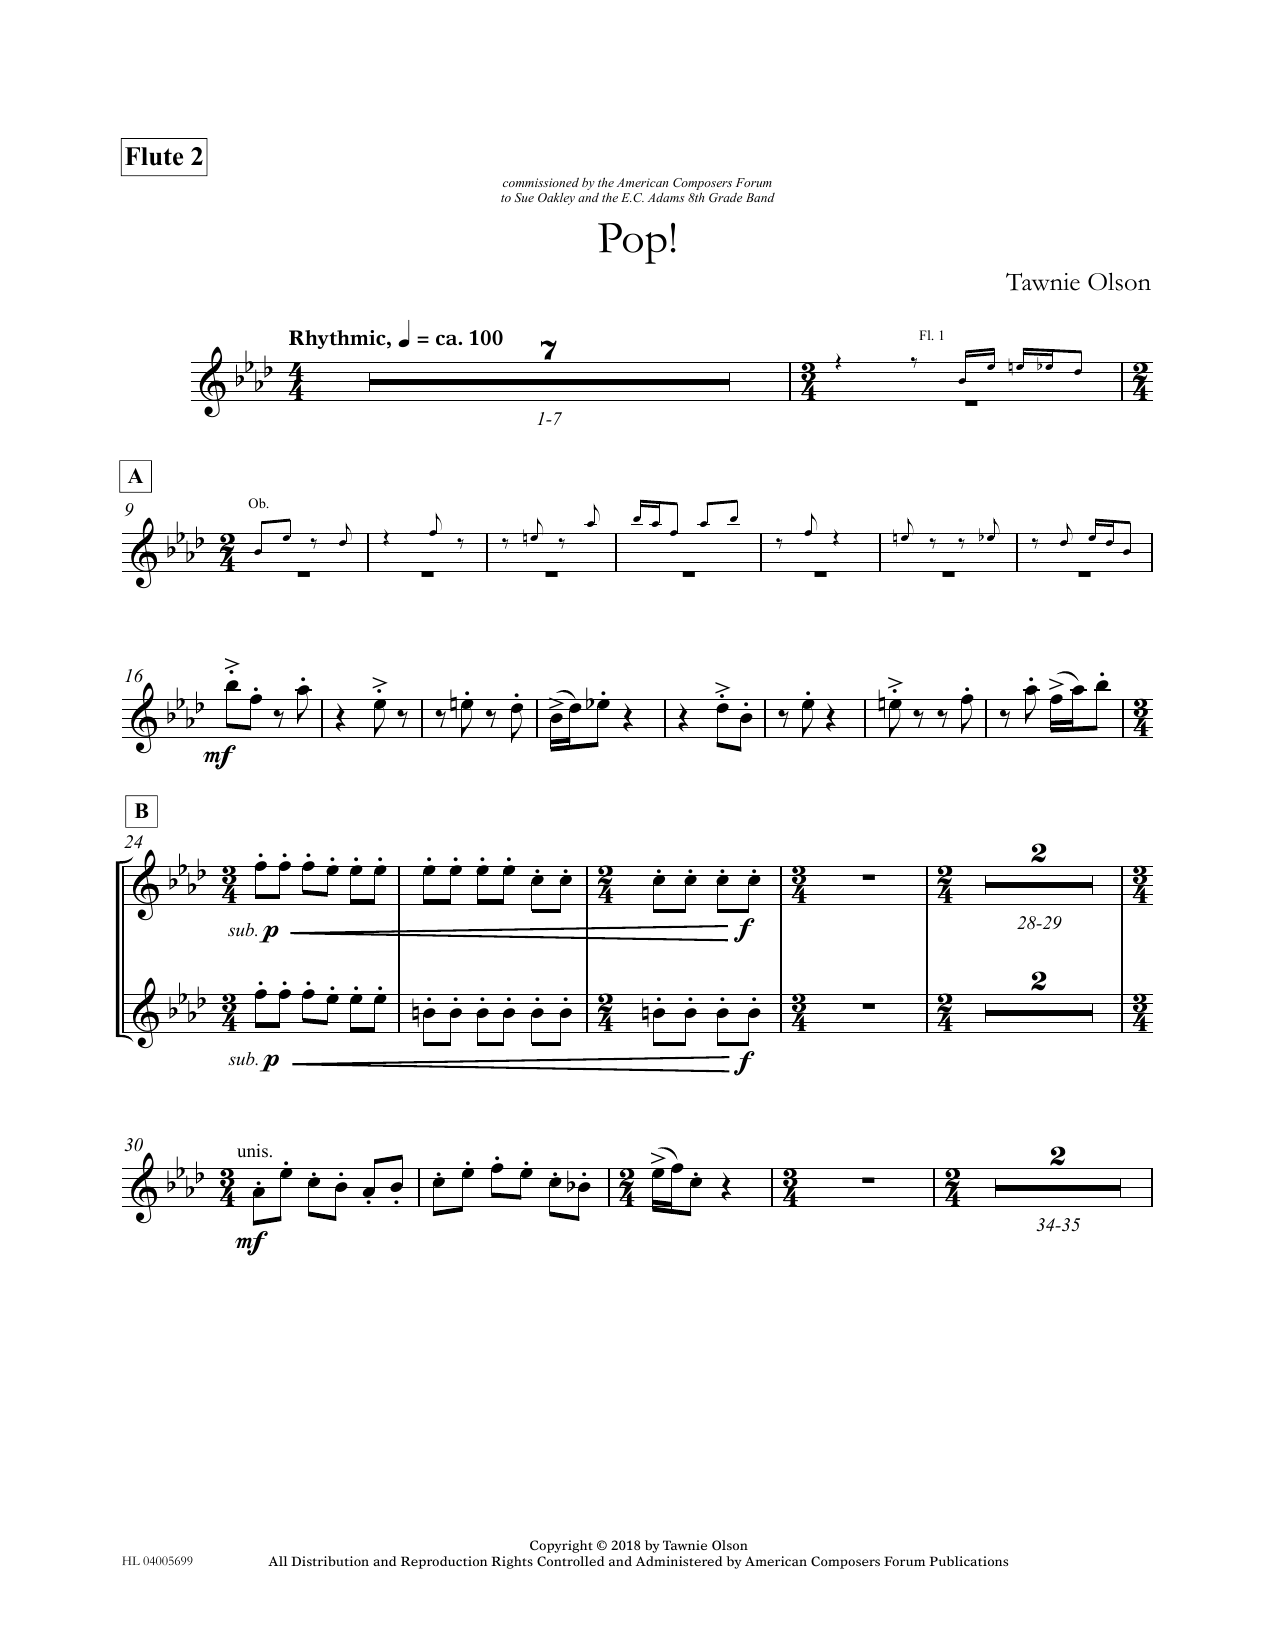 Download Tawnie Olson Pop! - Flute 2 (Divisi) Sheet Music